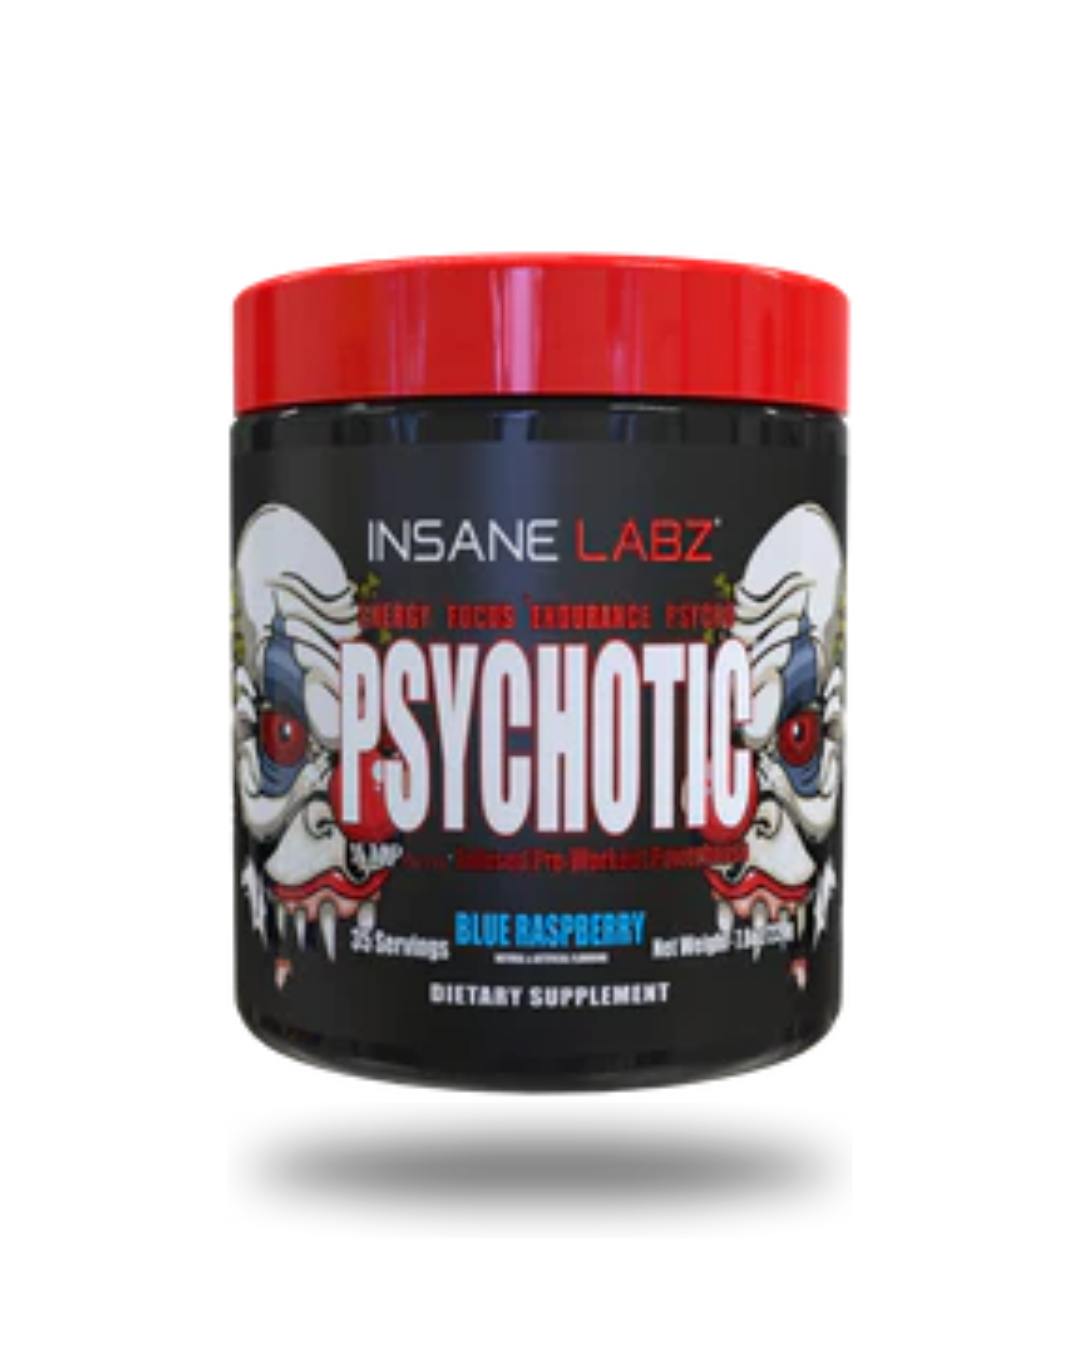 Insane Labz: Psychotic Preworkout